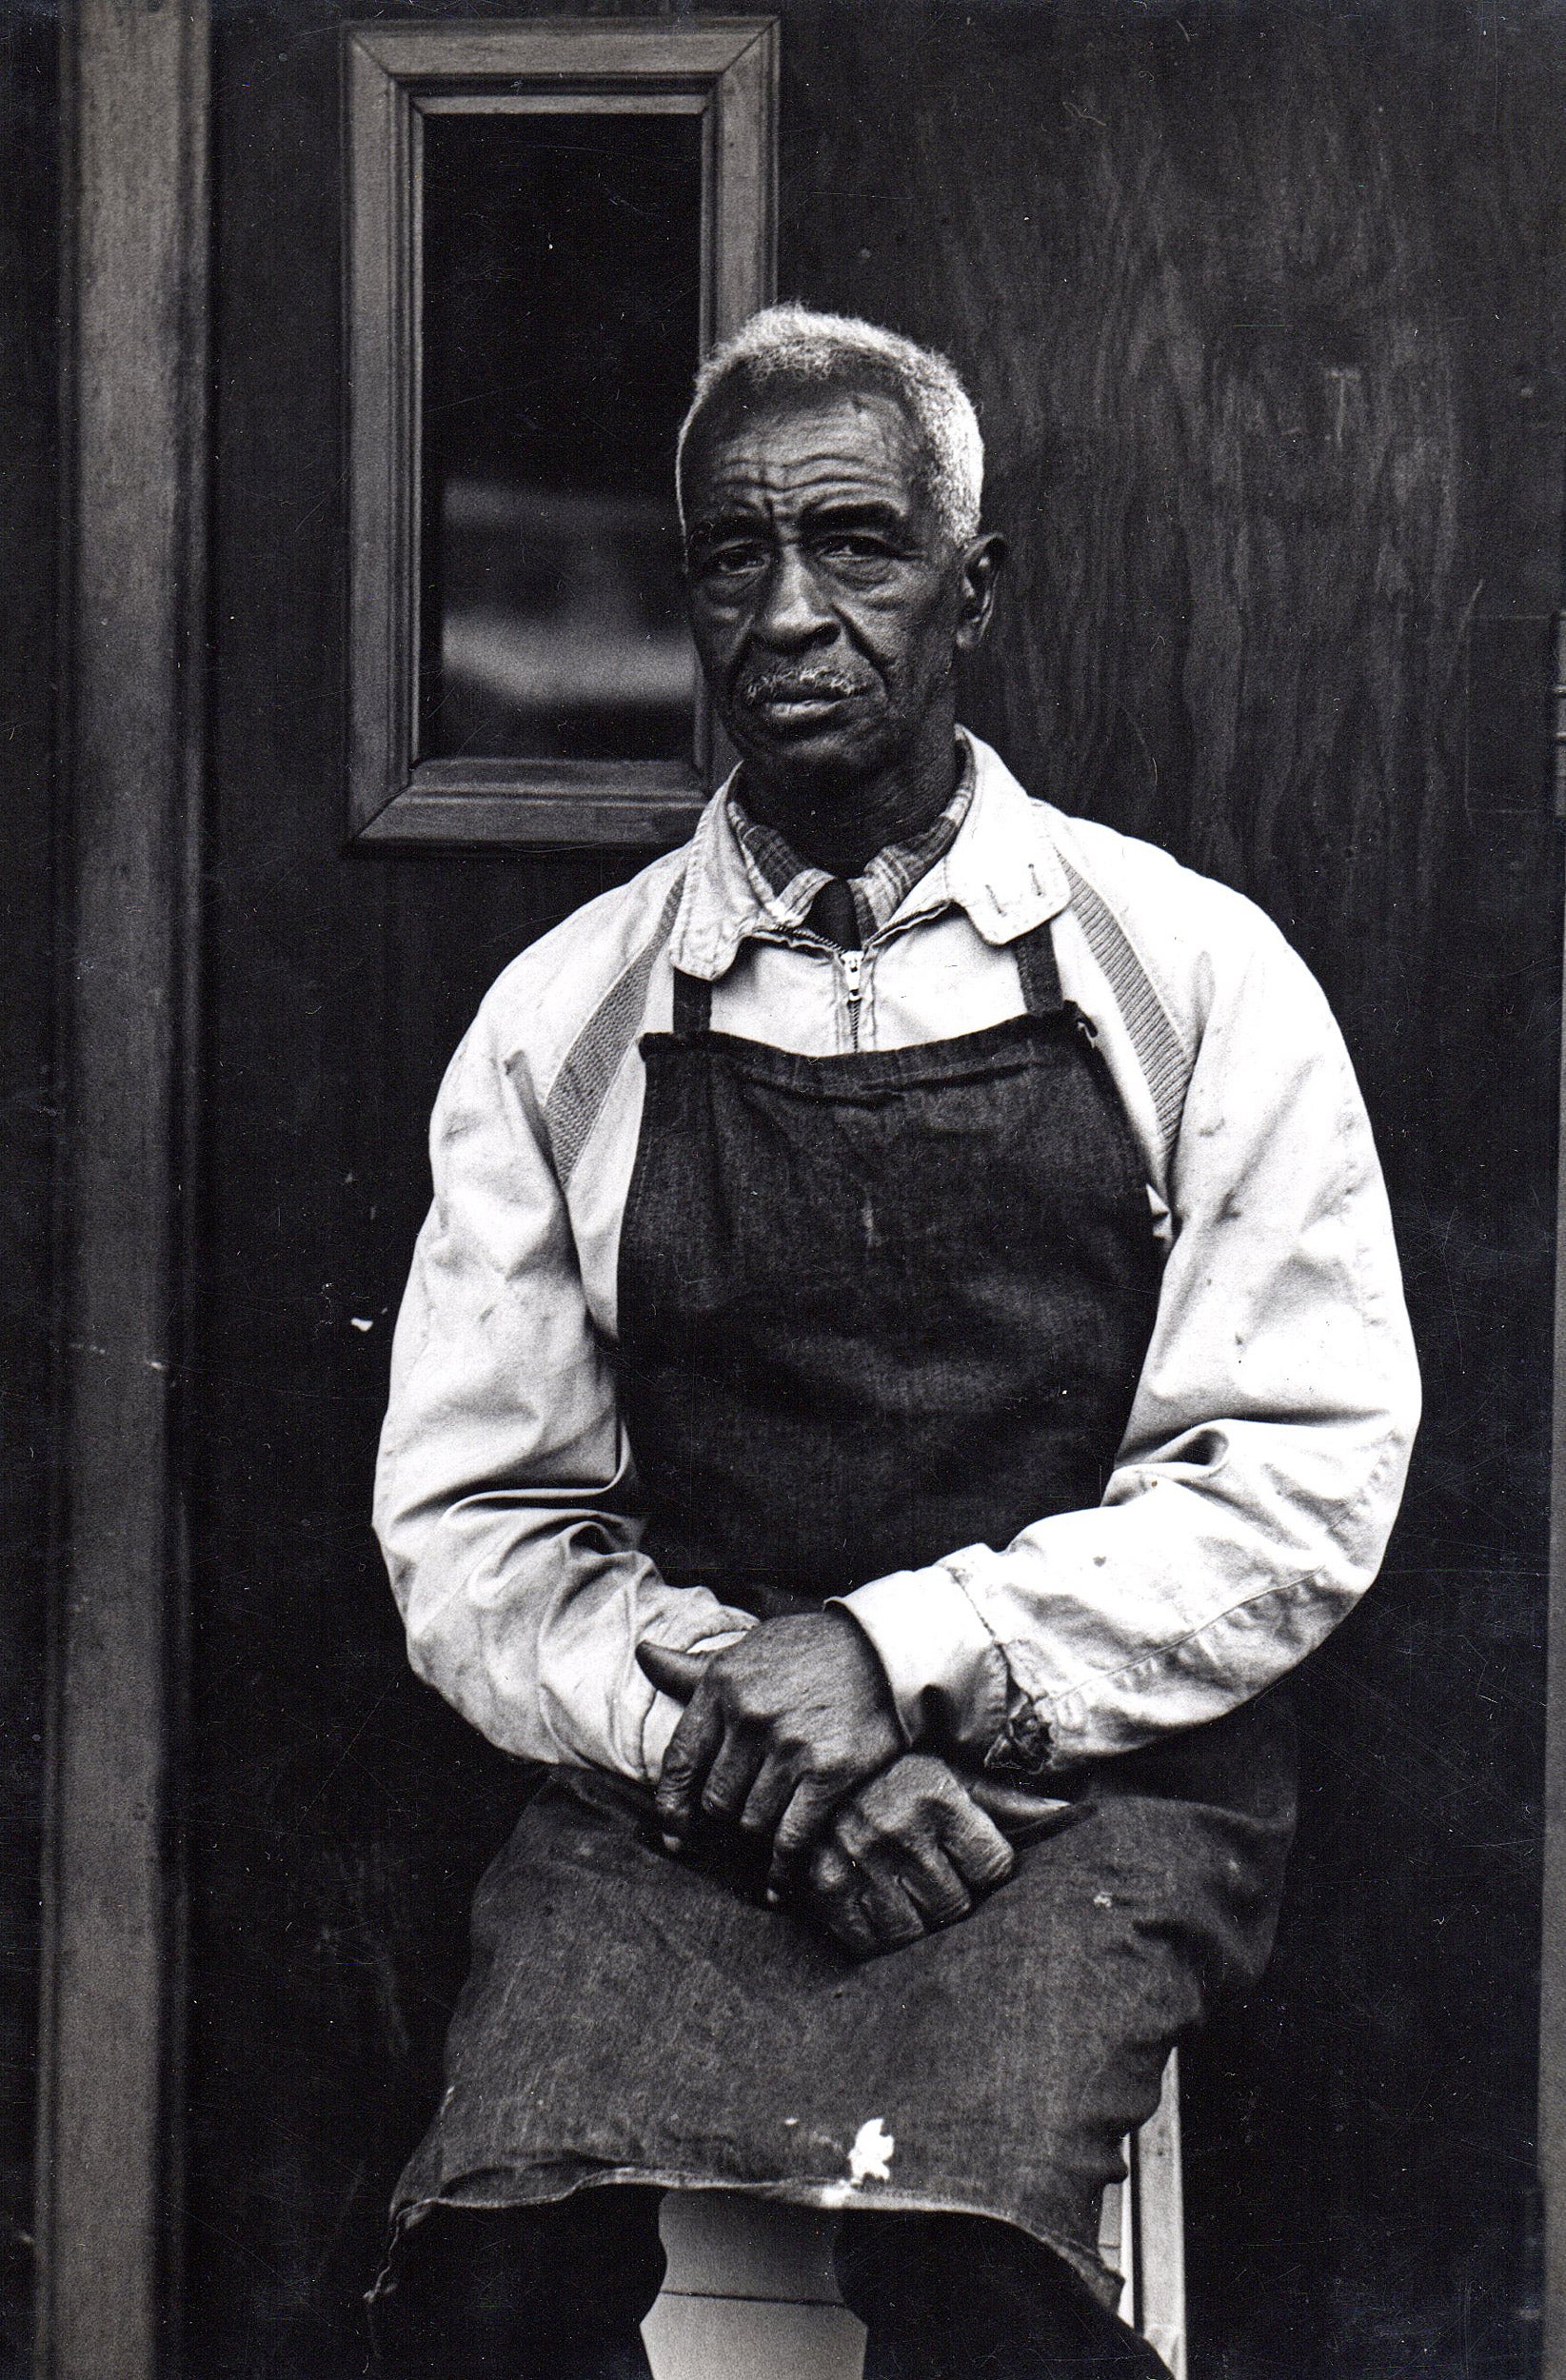 Man wearing apron seated on Blake Avenue in New York, 1965.